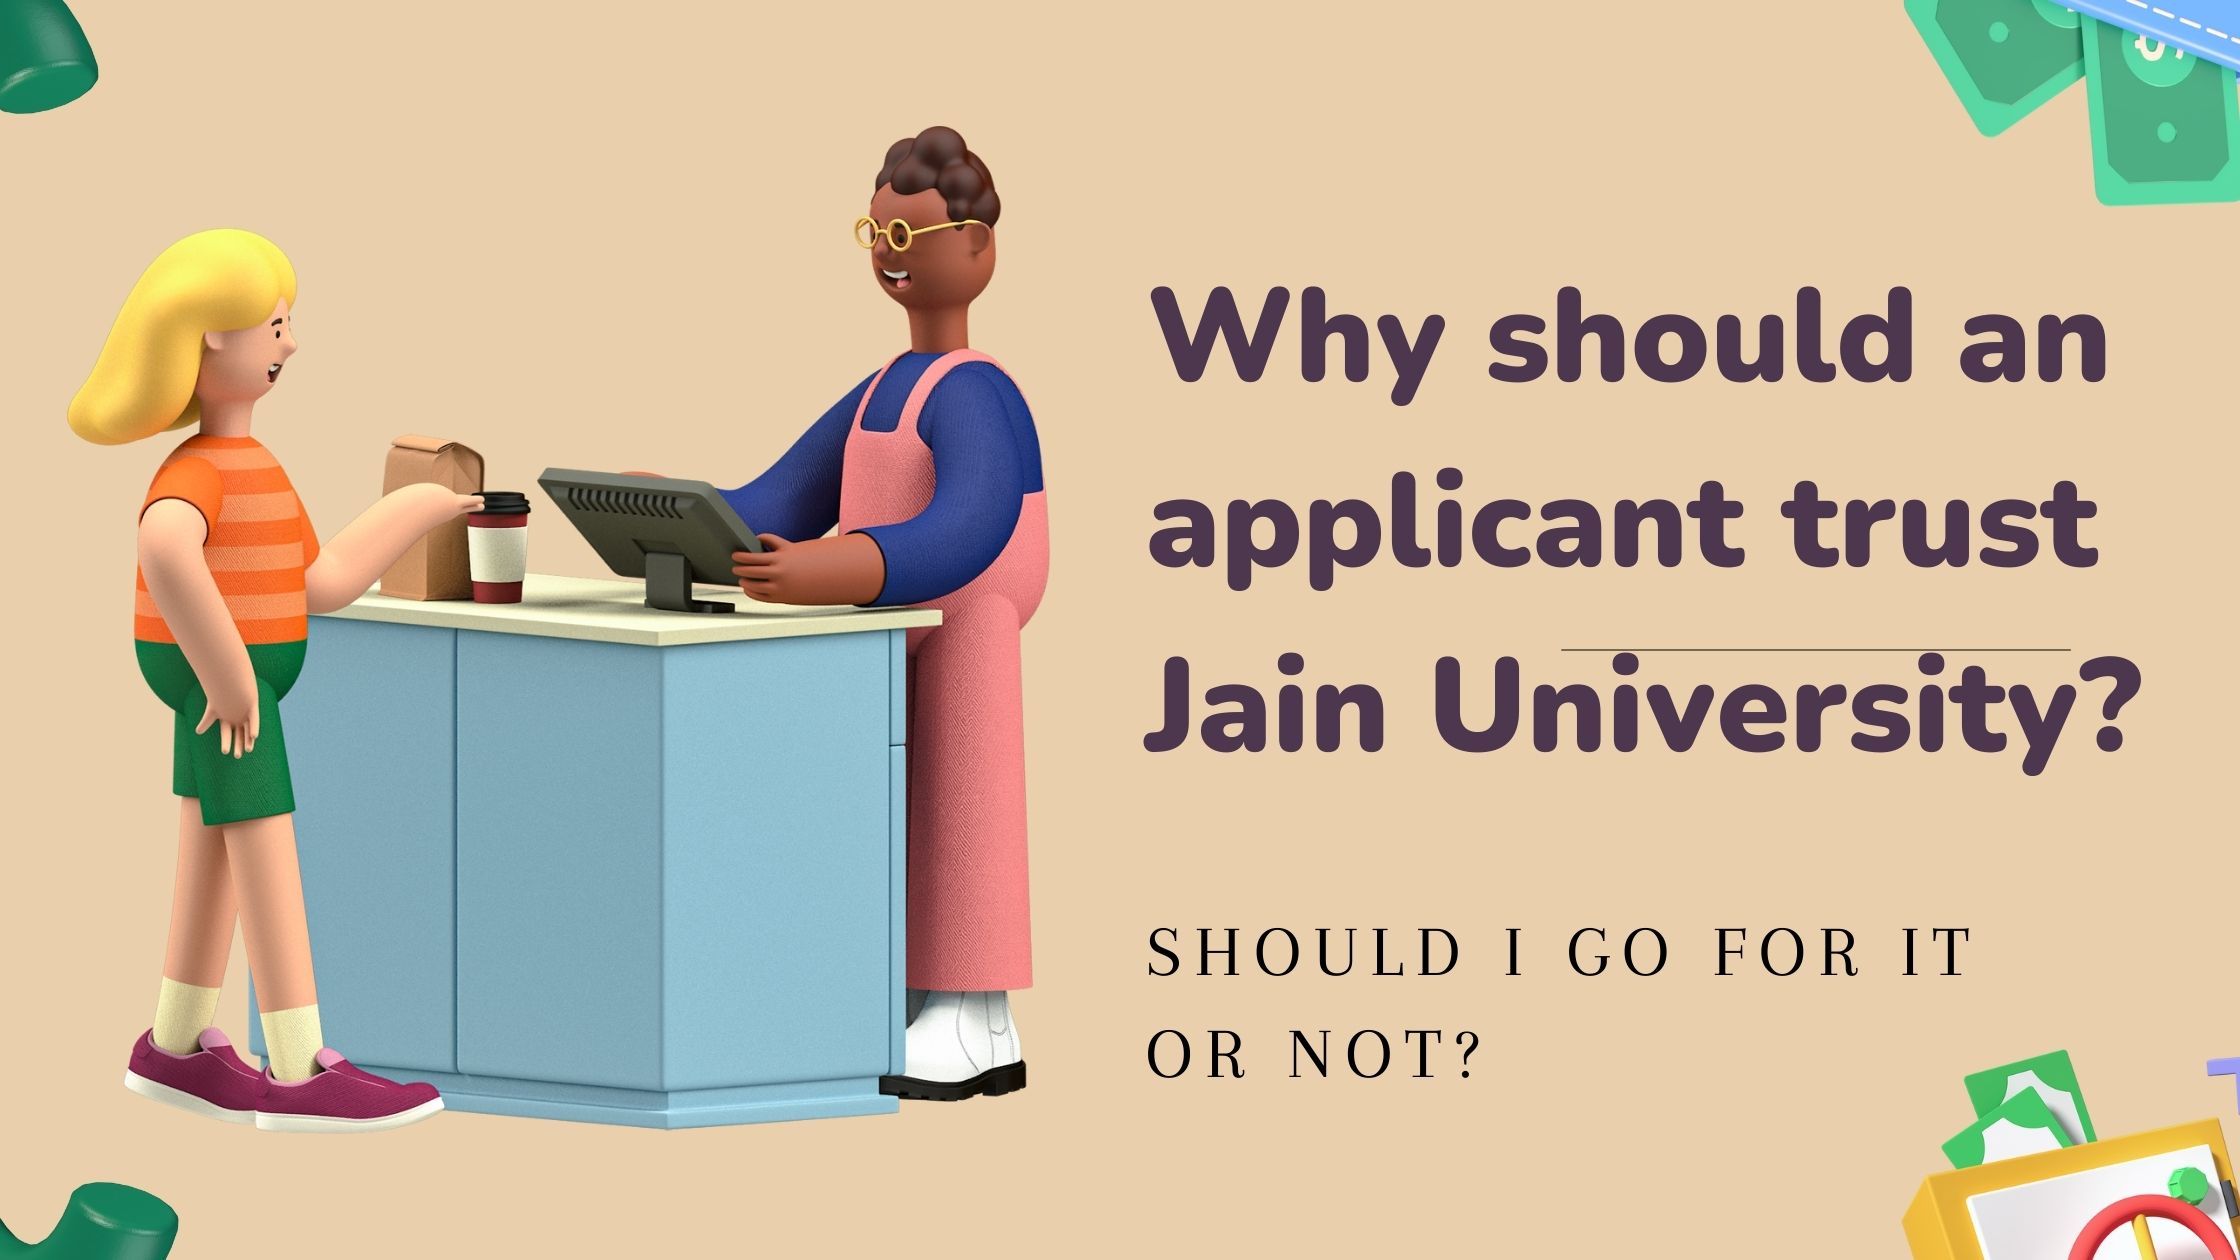 Why should an applicant trust Jain University?